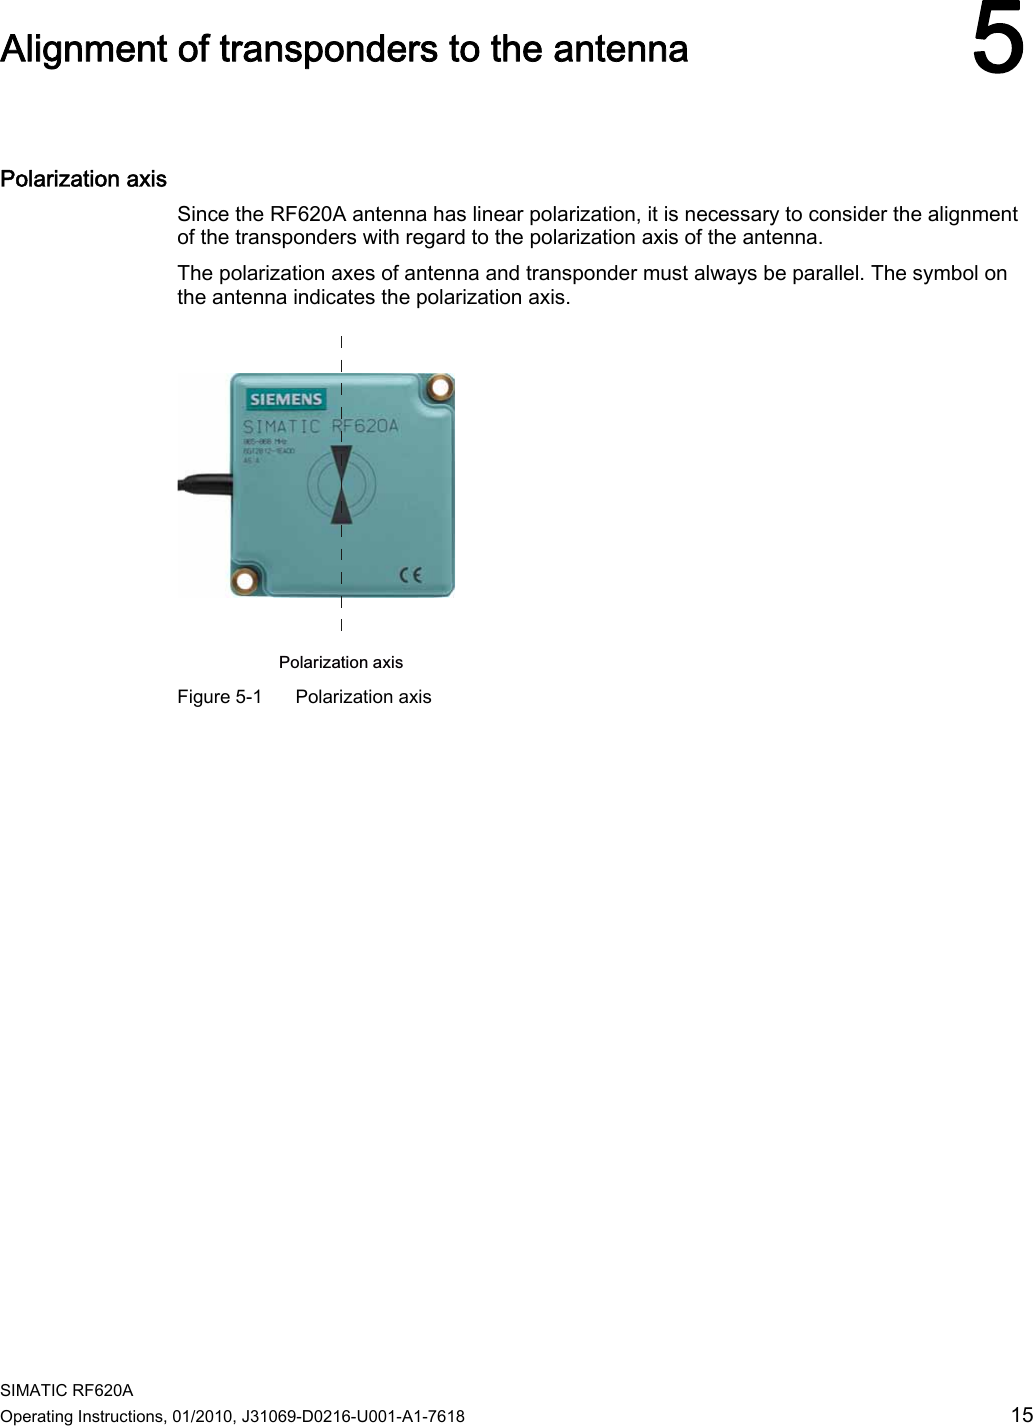 Page 15 of Siemens RF660 RFID reader User Manual SIMATIC RF620A